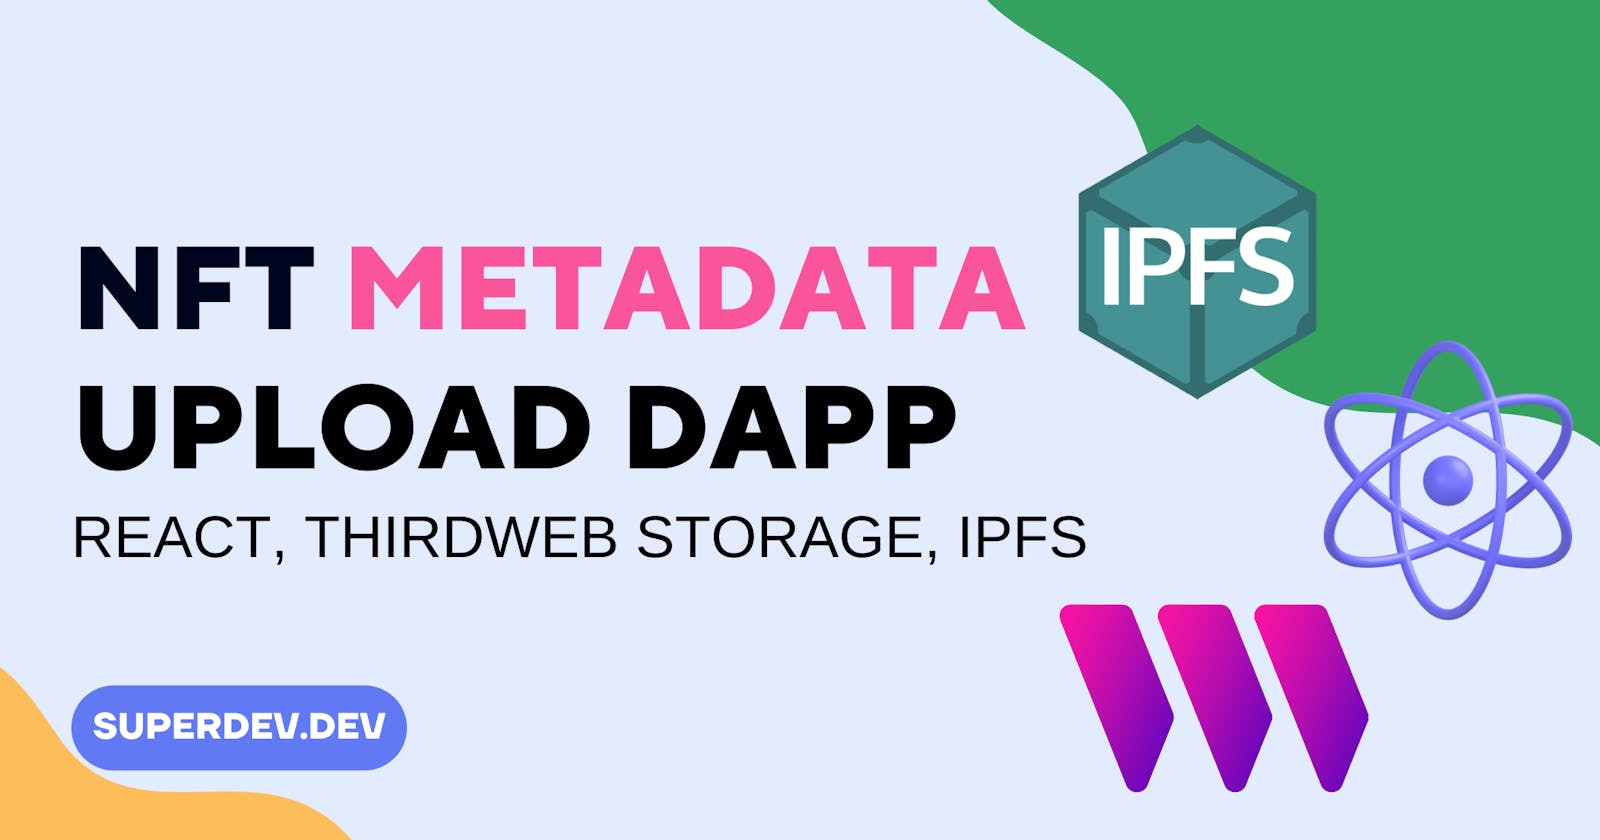 NFT Metadata Upload DApp With React & Thirdweb Storage